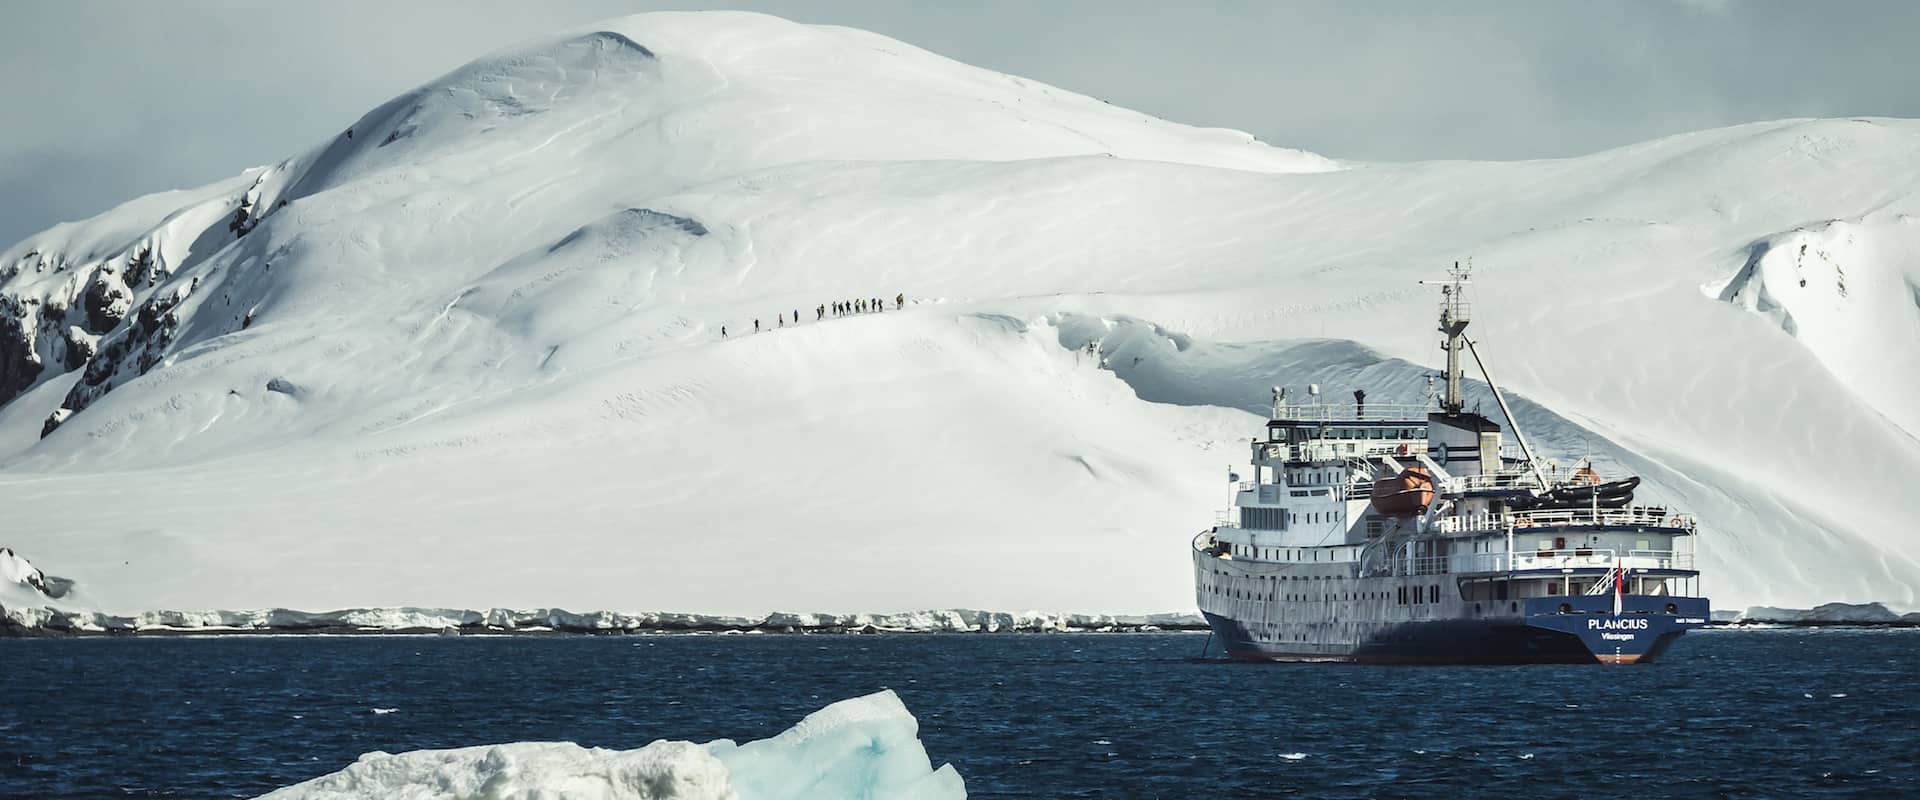 7 Cruises in Antarctica - LiveAboard.com